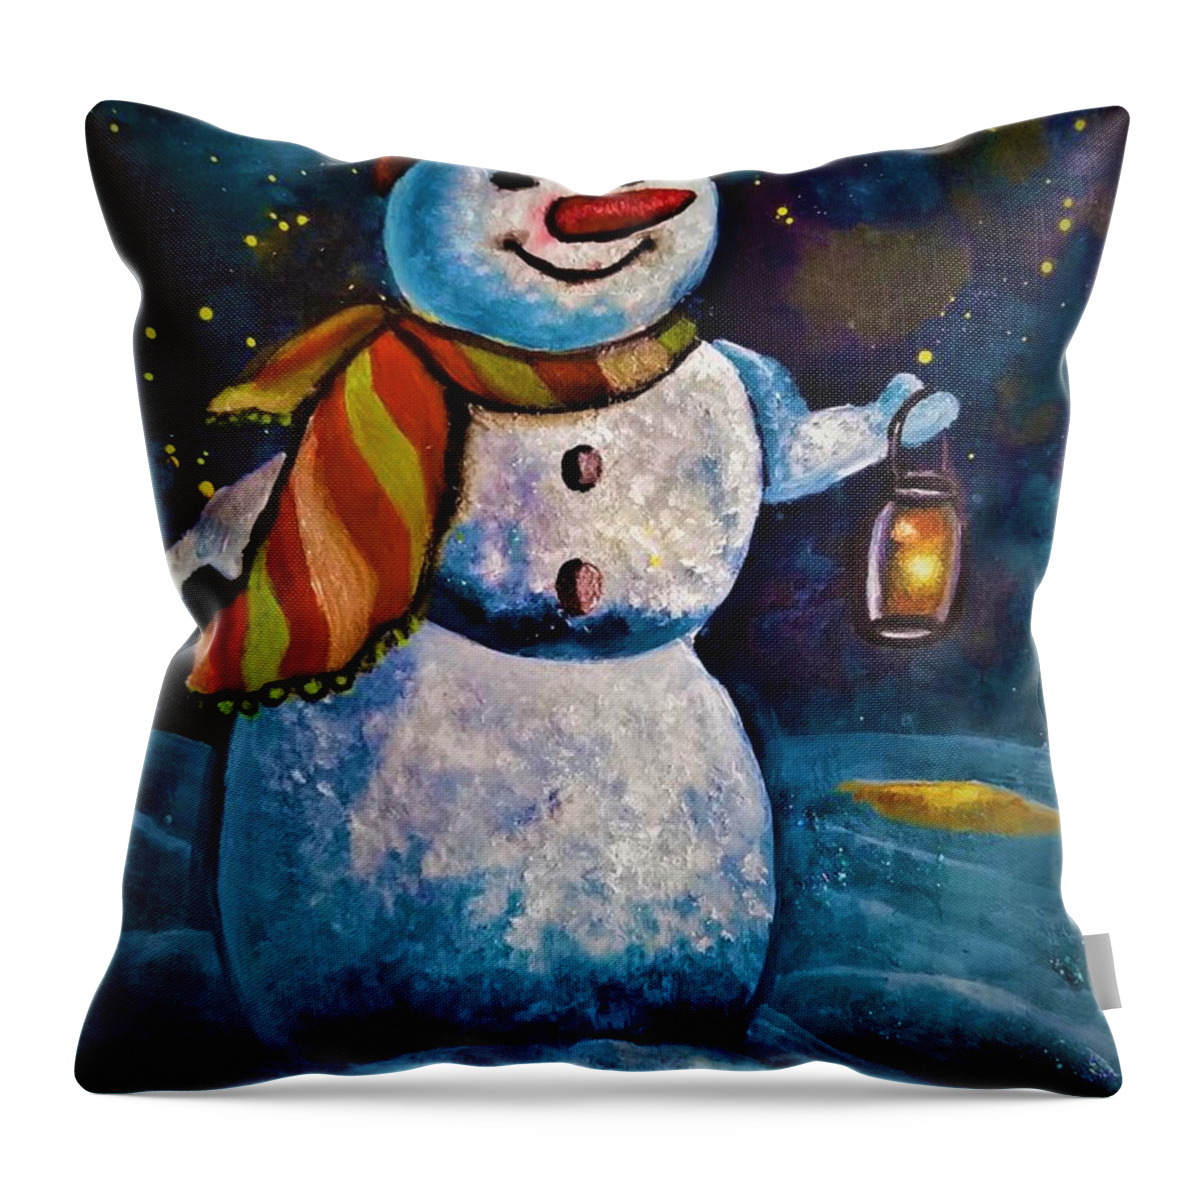 Snowman Throw Pillow featuring the painting Jolly snowman by Tara Krishna